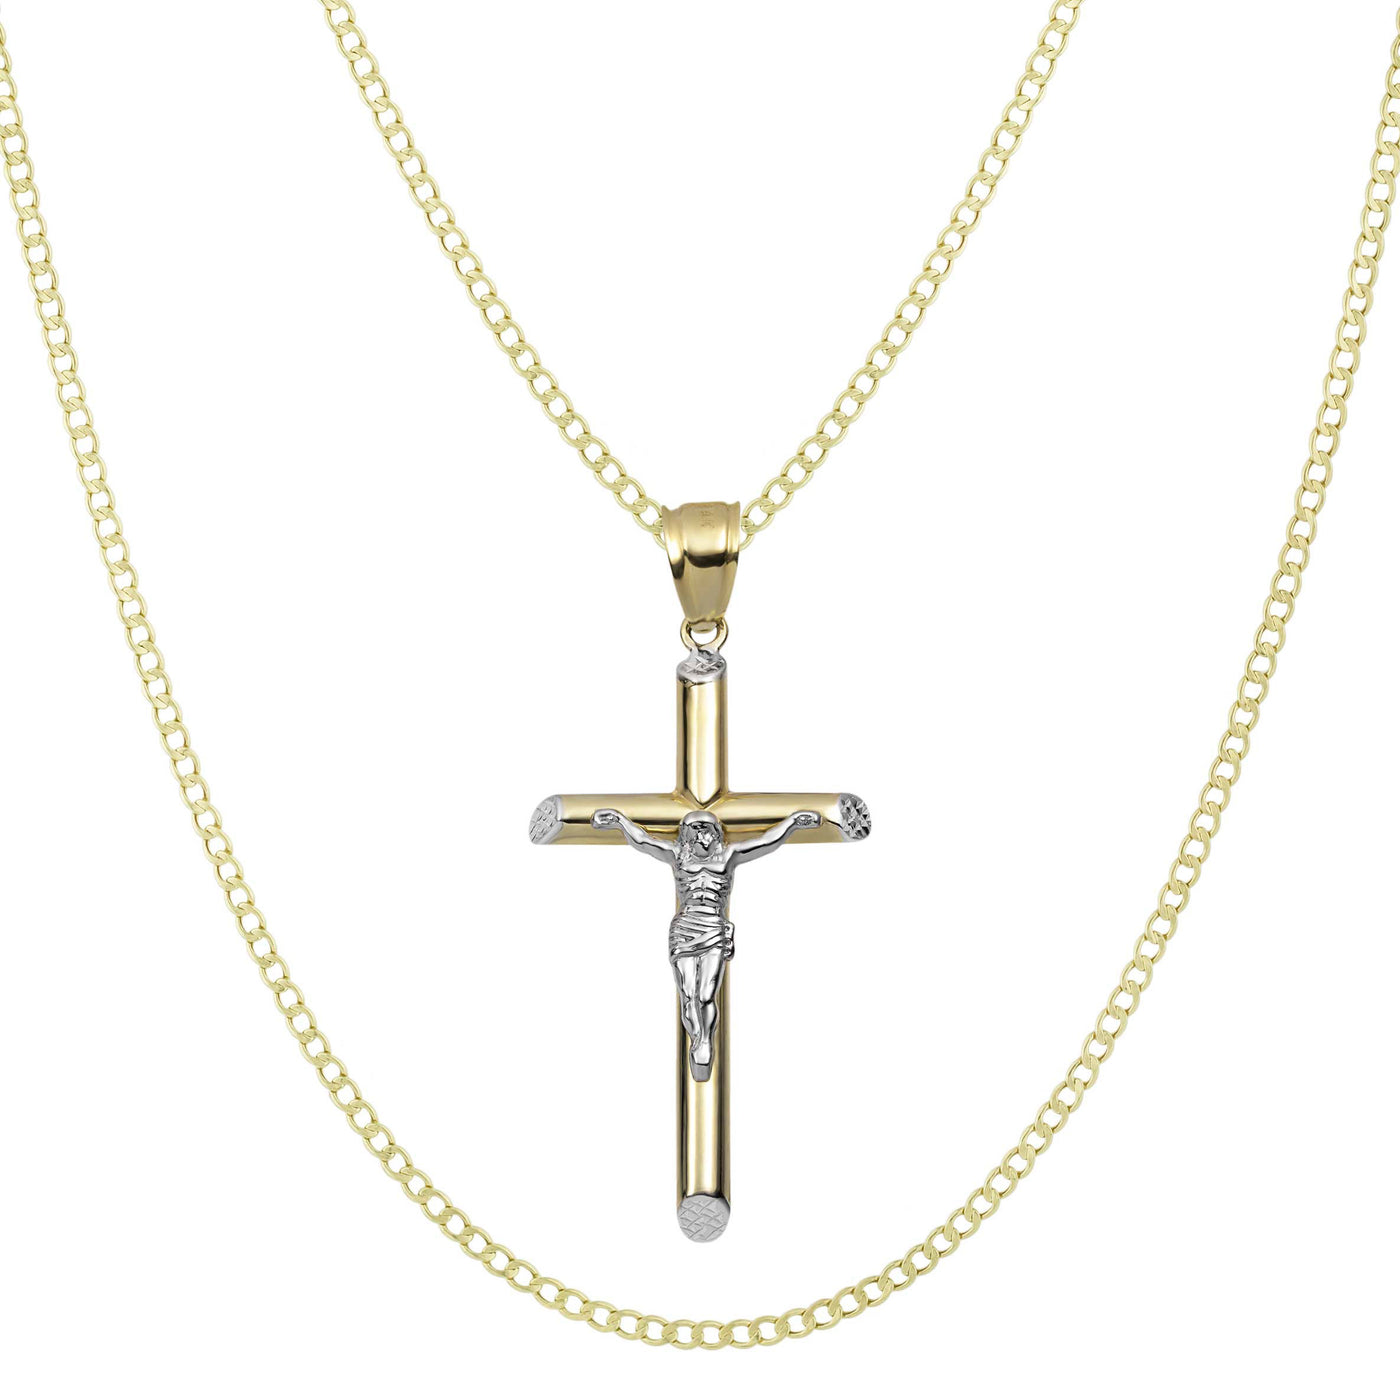 2 1/4" Diamond Cut Jesus Cross Crucifix Pendant & Chain Necklace Set 14K Yellow White Gold